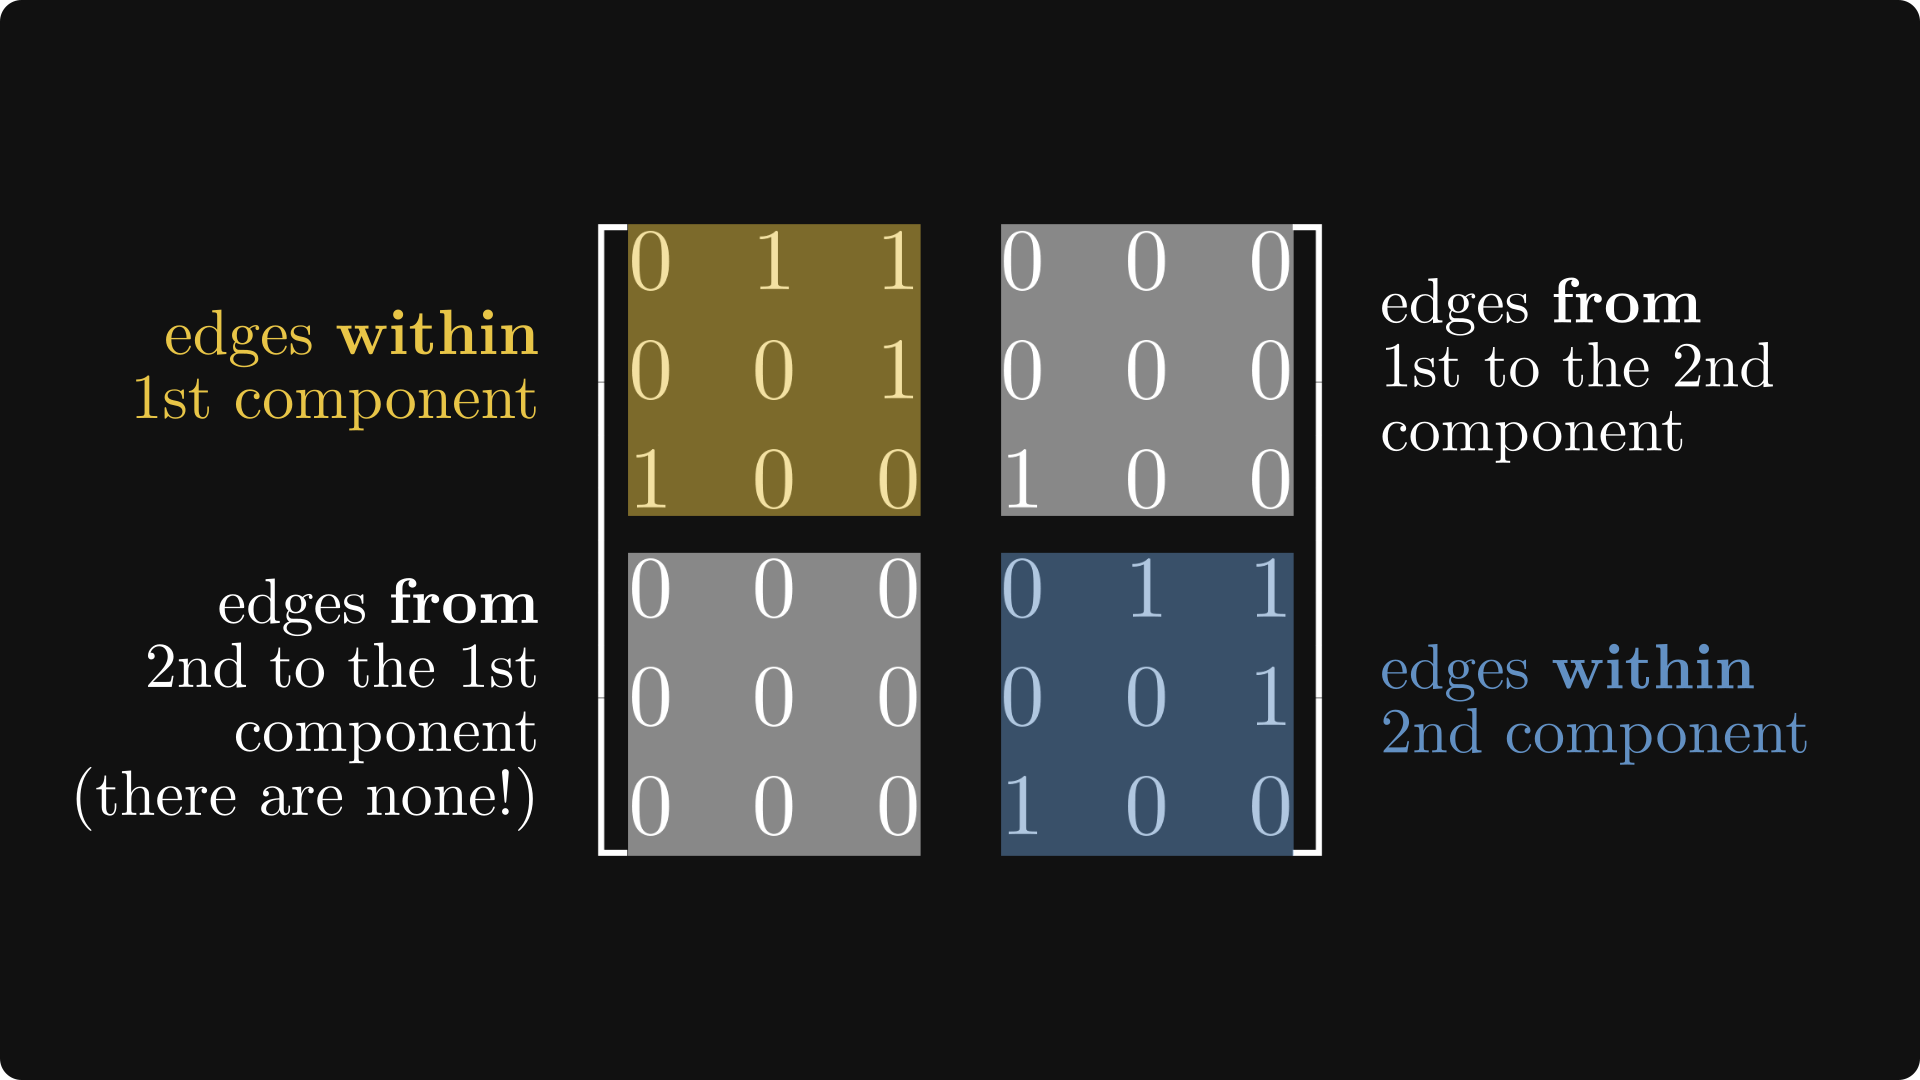 Computer implementations of Bertin's matrices. Top row: MATRIX (Durand